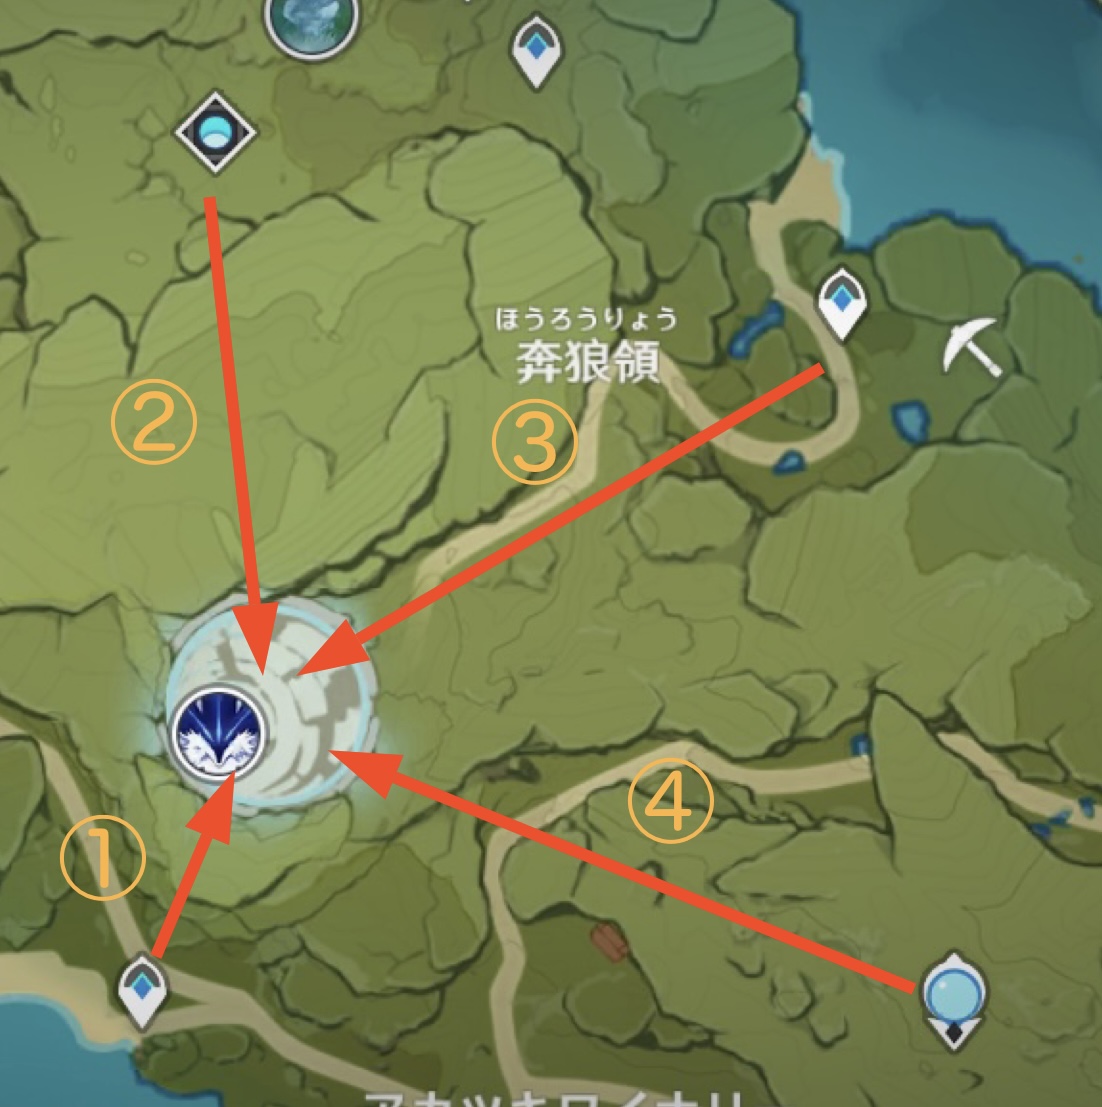 no humans cave gameplay mechanics fake screenshot arrow (symbol) tree from above  illustration images